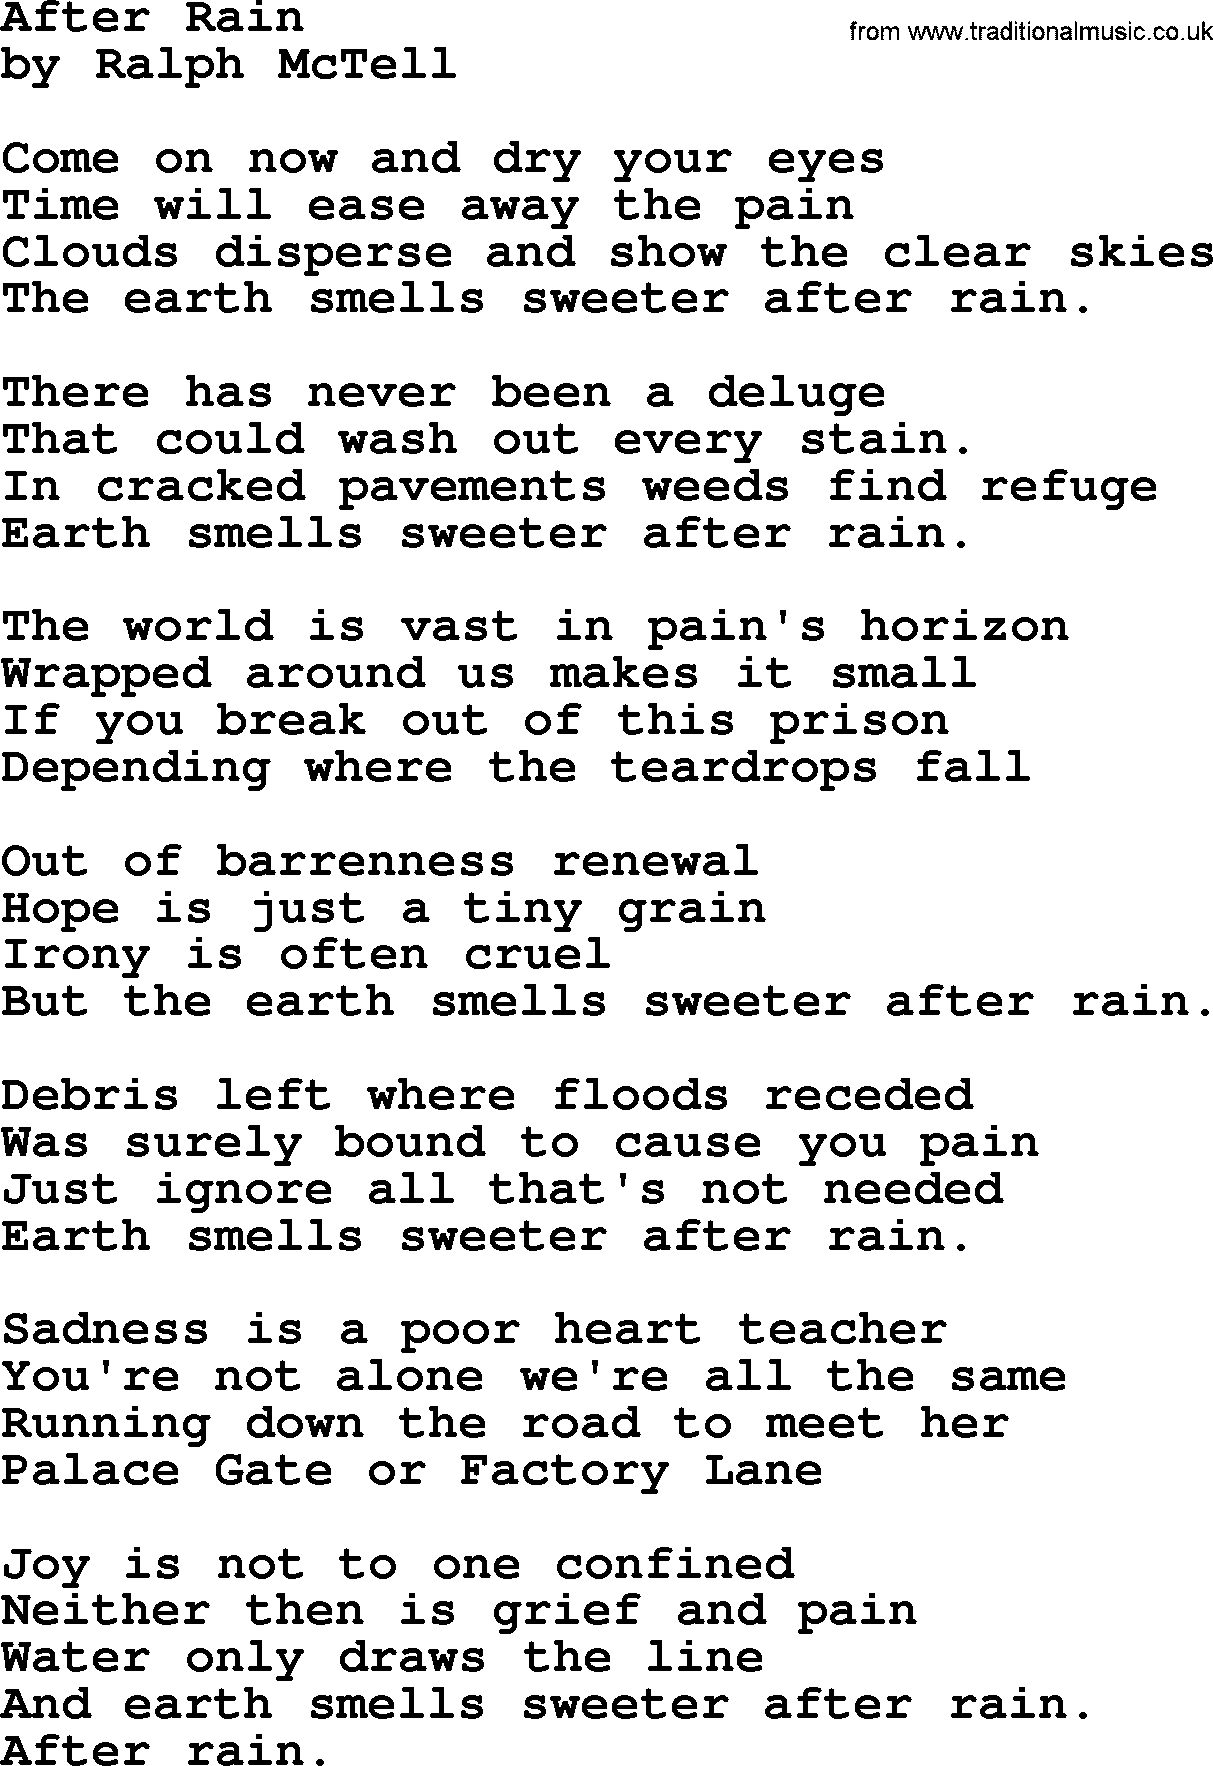 Ralph McTell Song: After Rain, lyrics